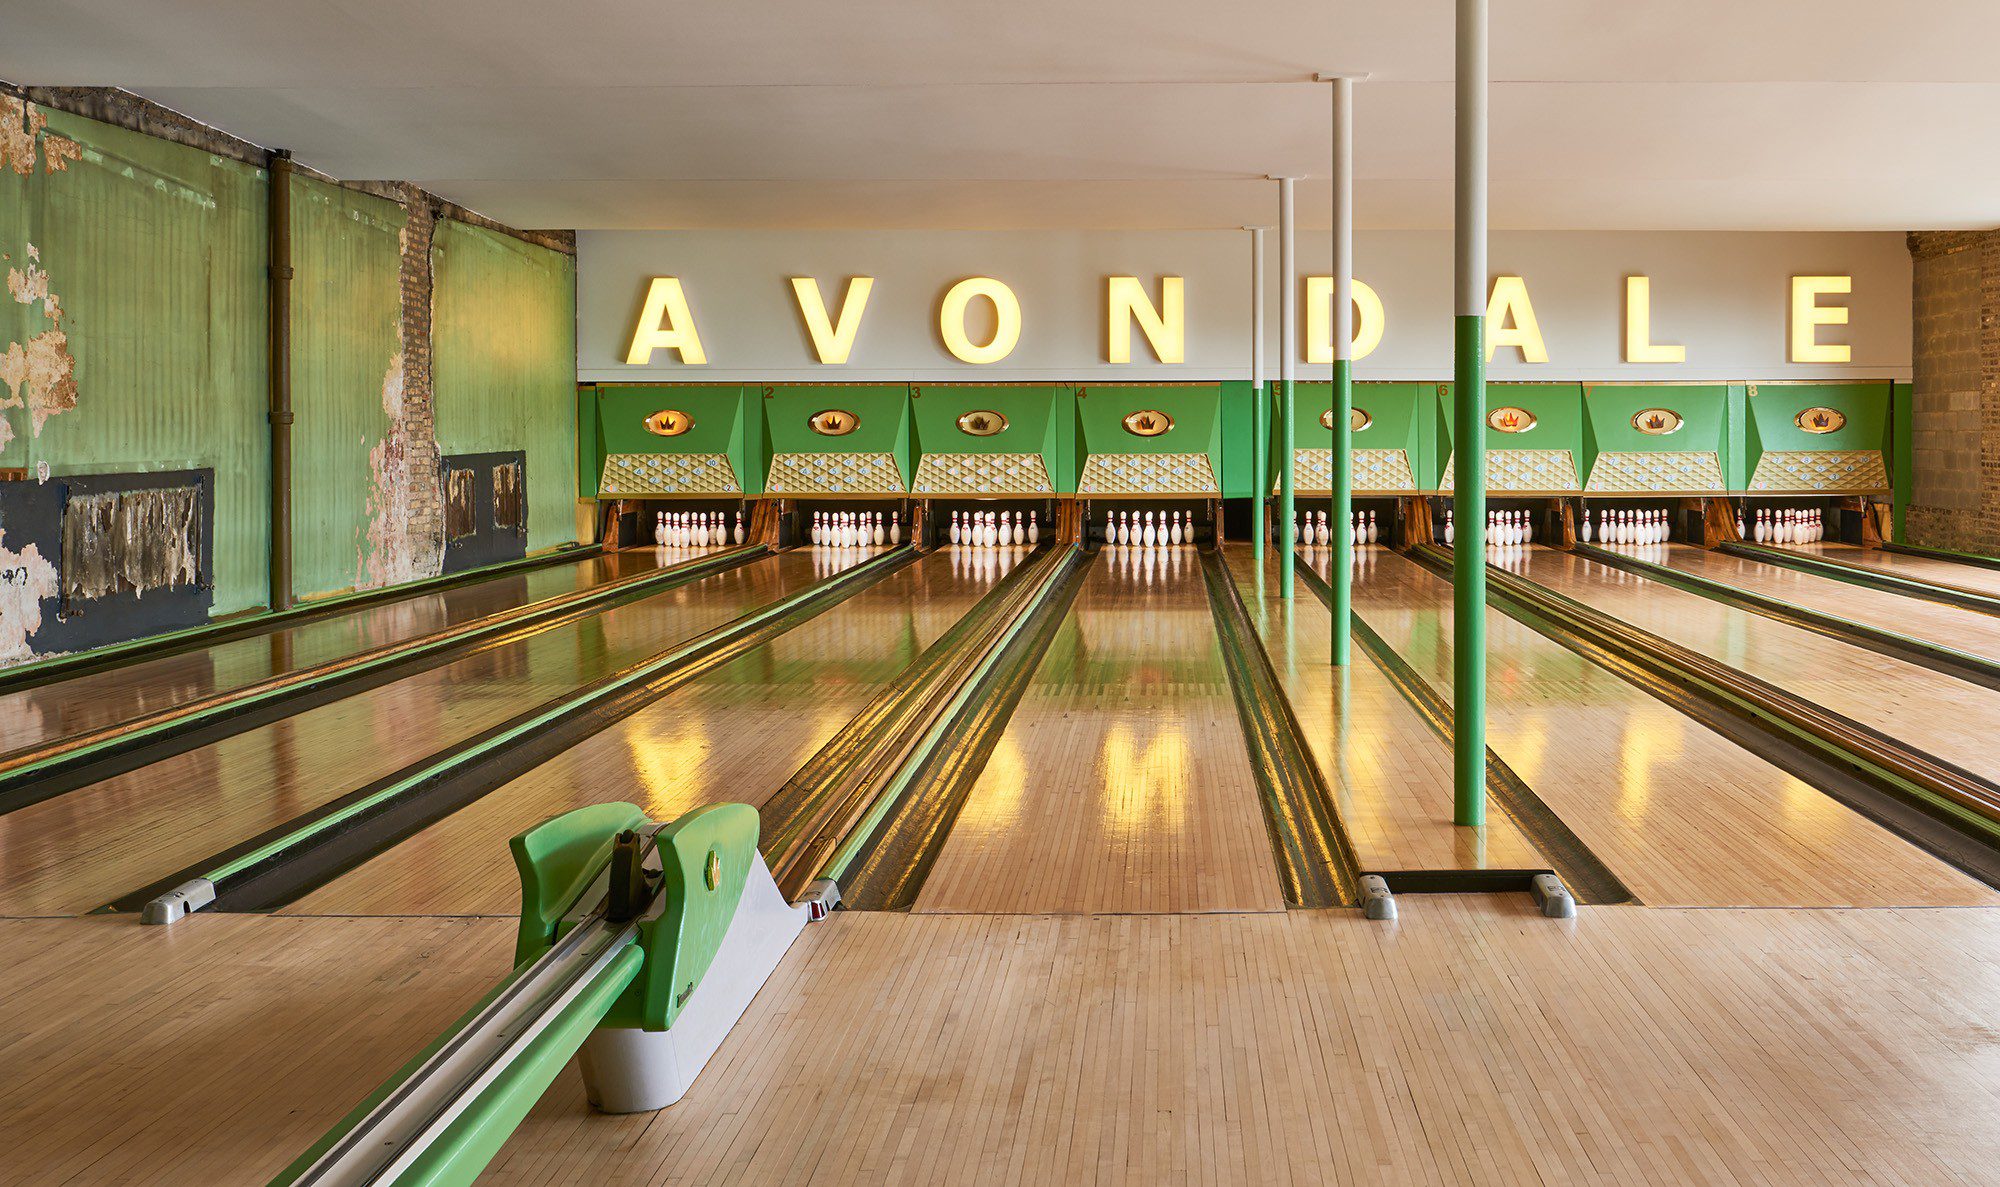 Avondale bowling alley